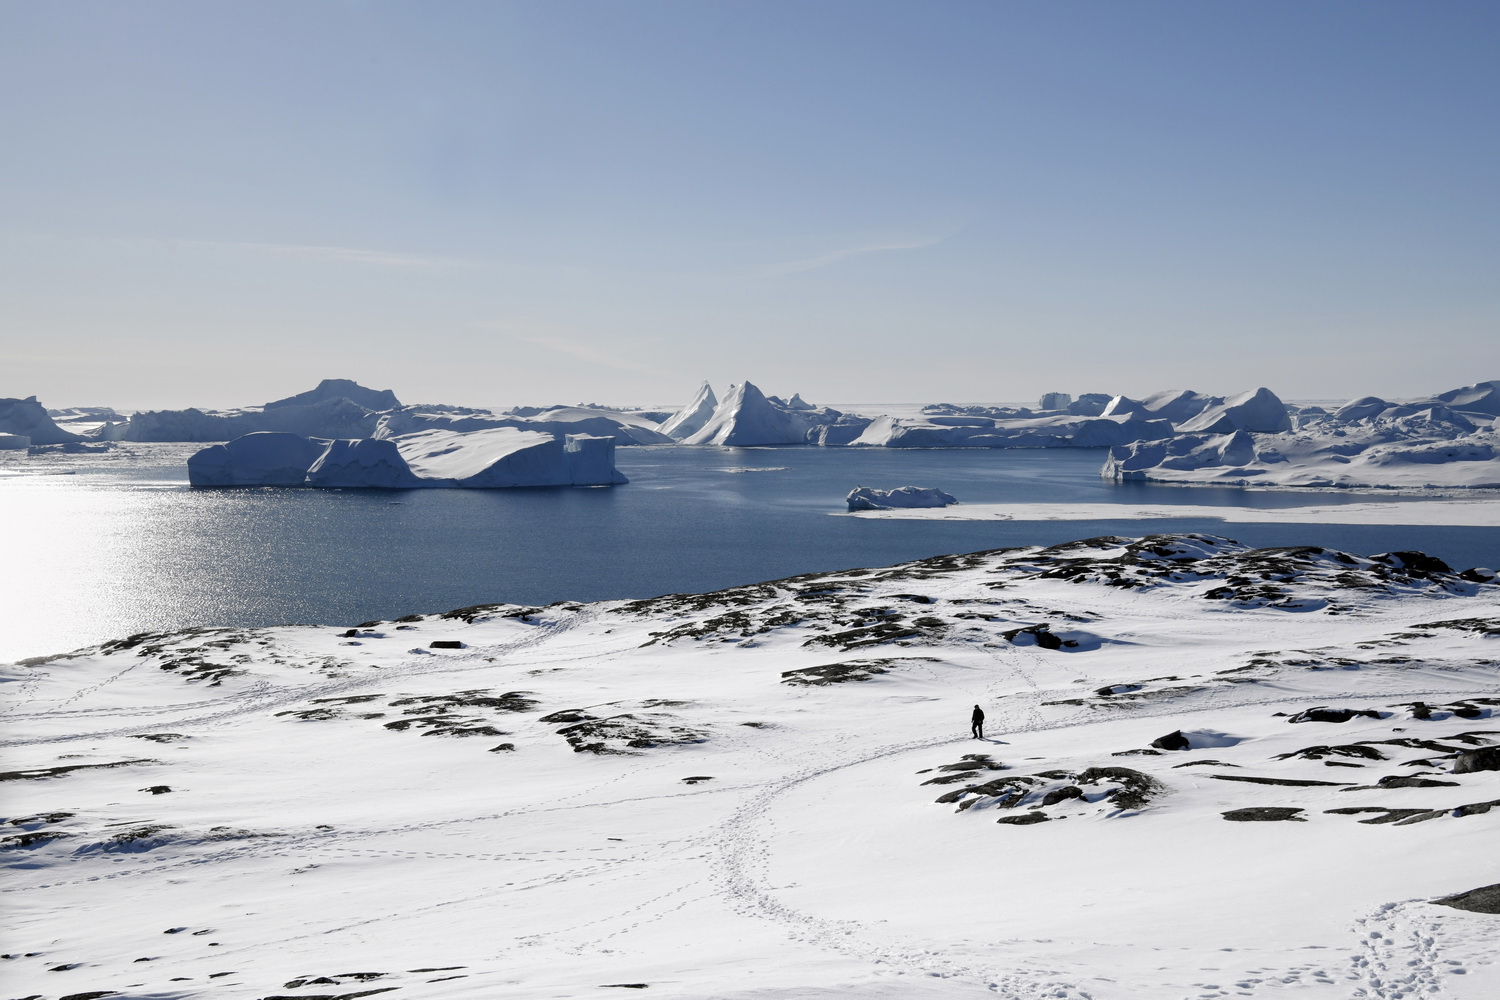 Dolph Kessler - Keep Greenland a secret / het westen 